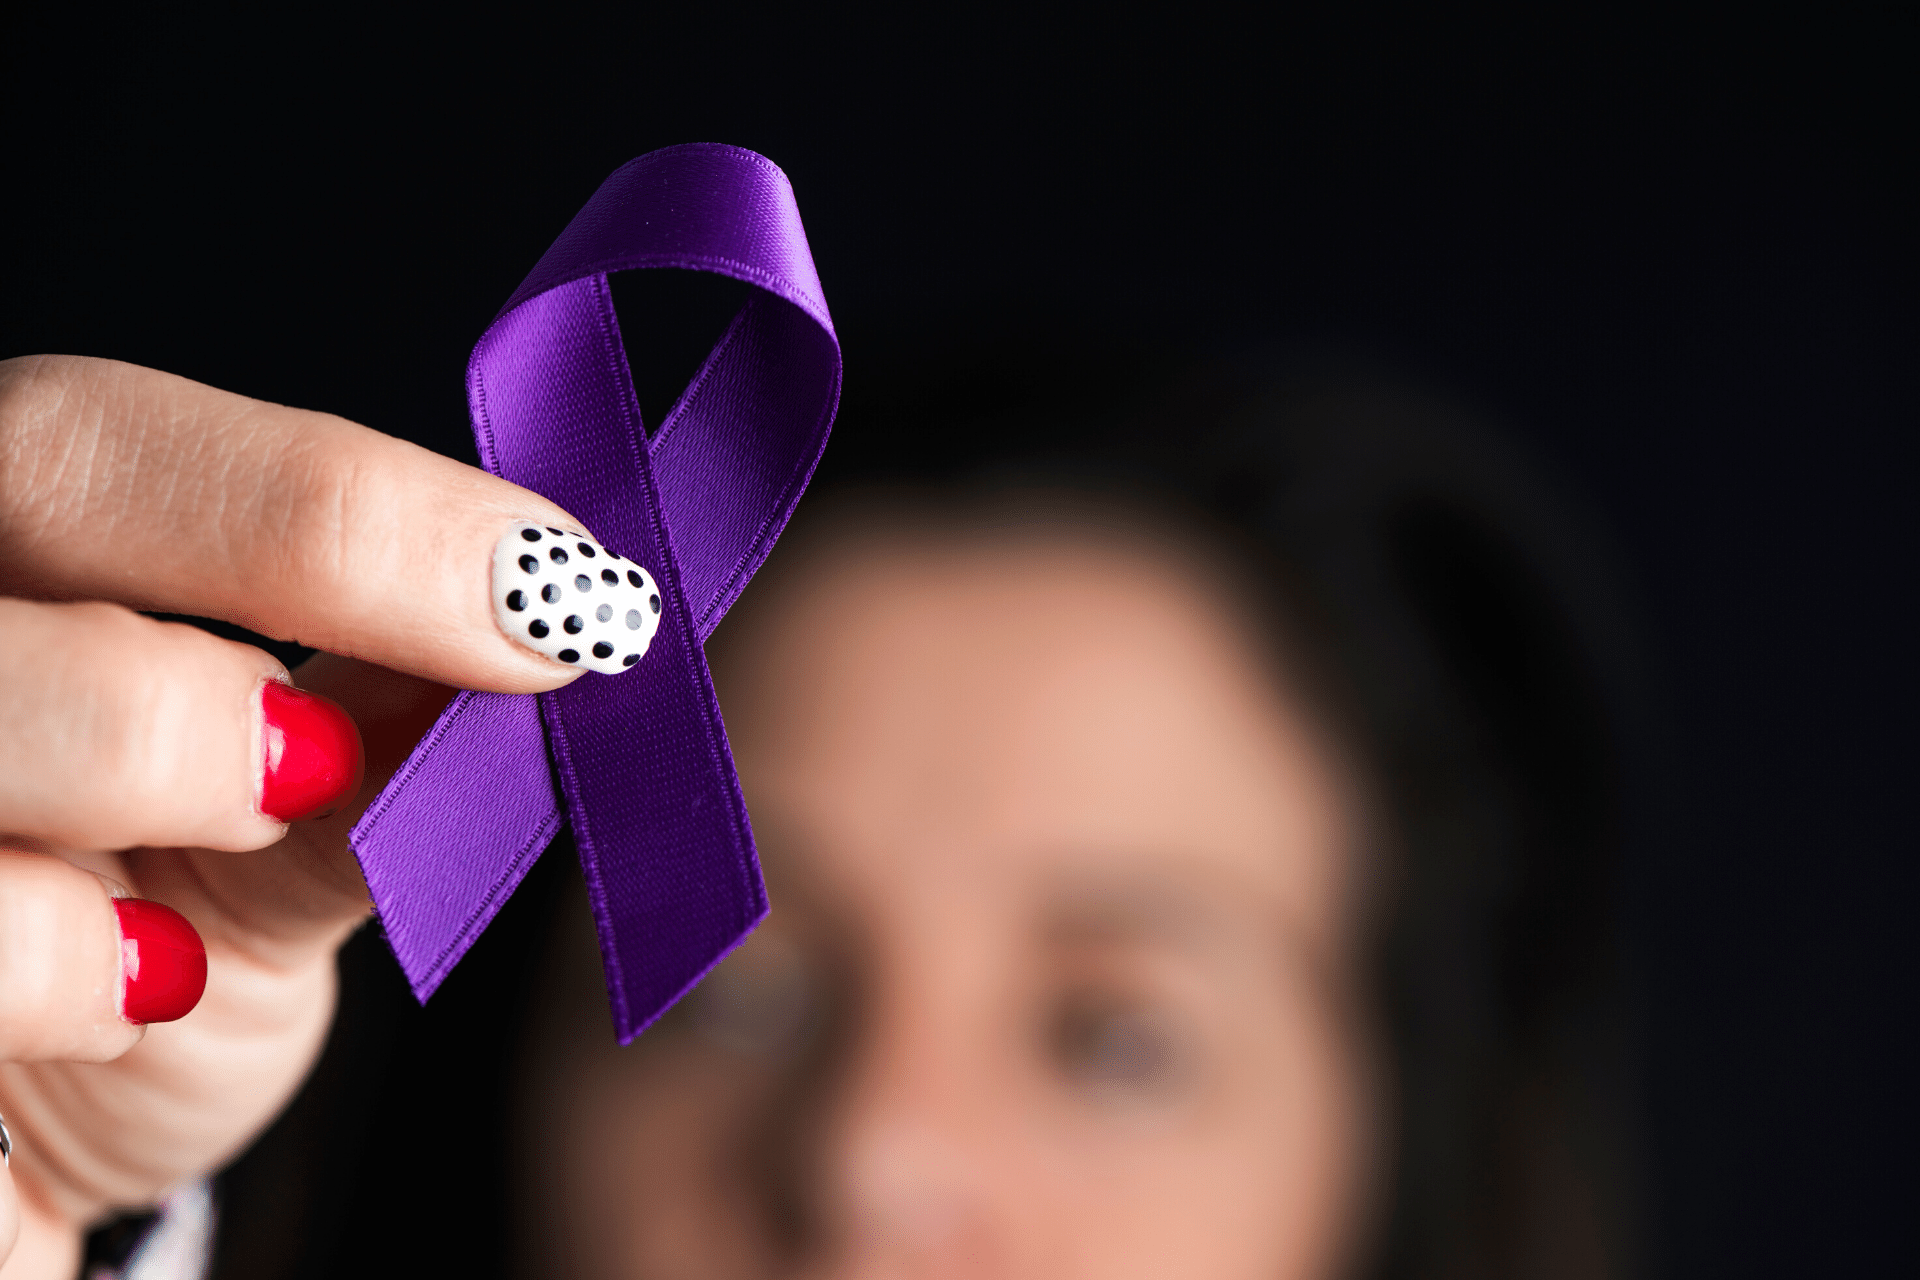 Purple domestic violence awareness ribbon